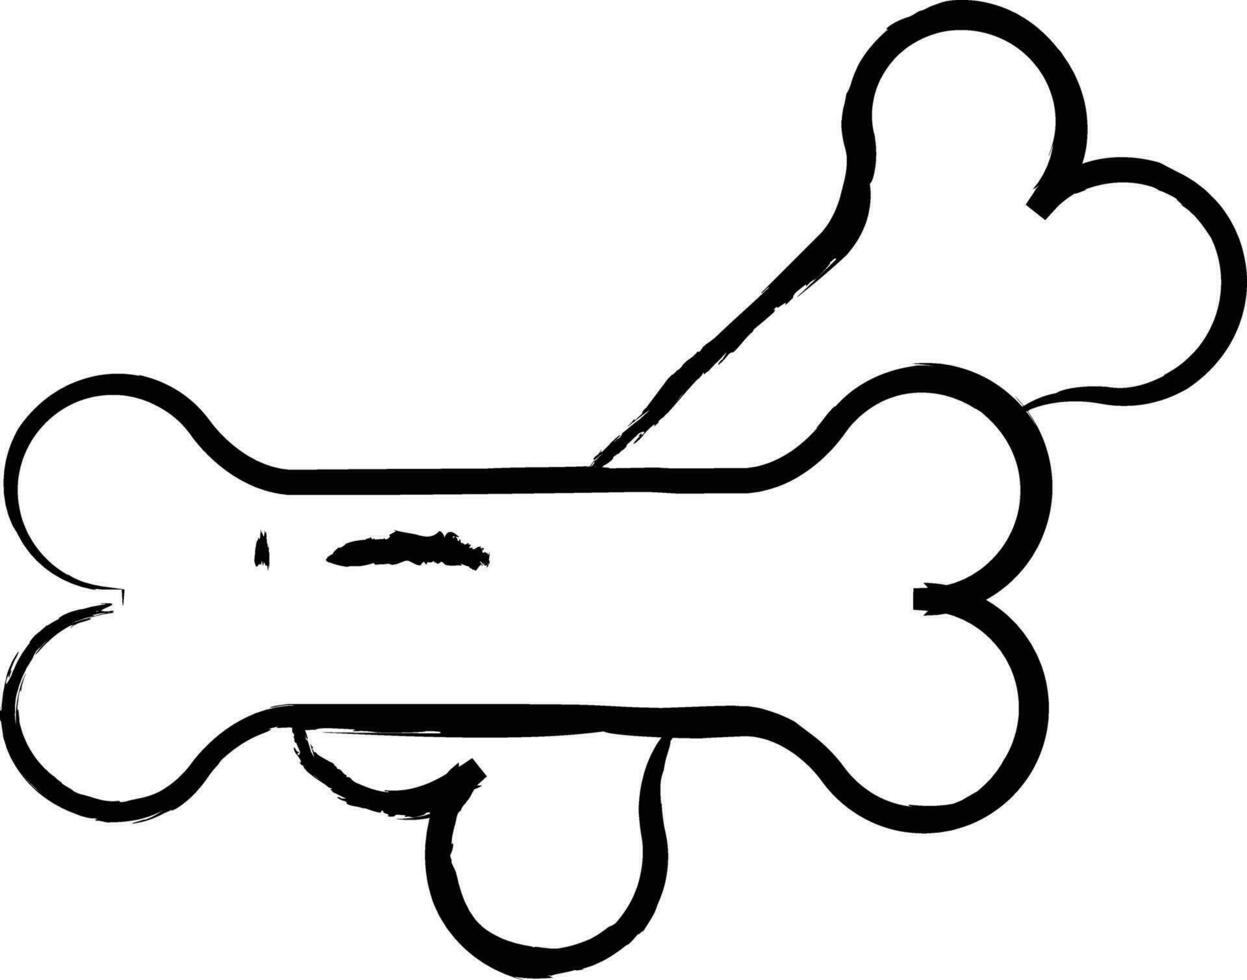 Bone hand drawn vector illustration